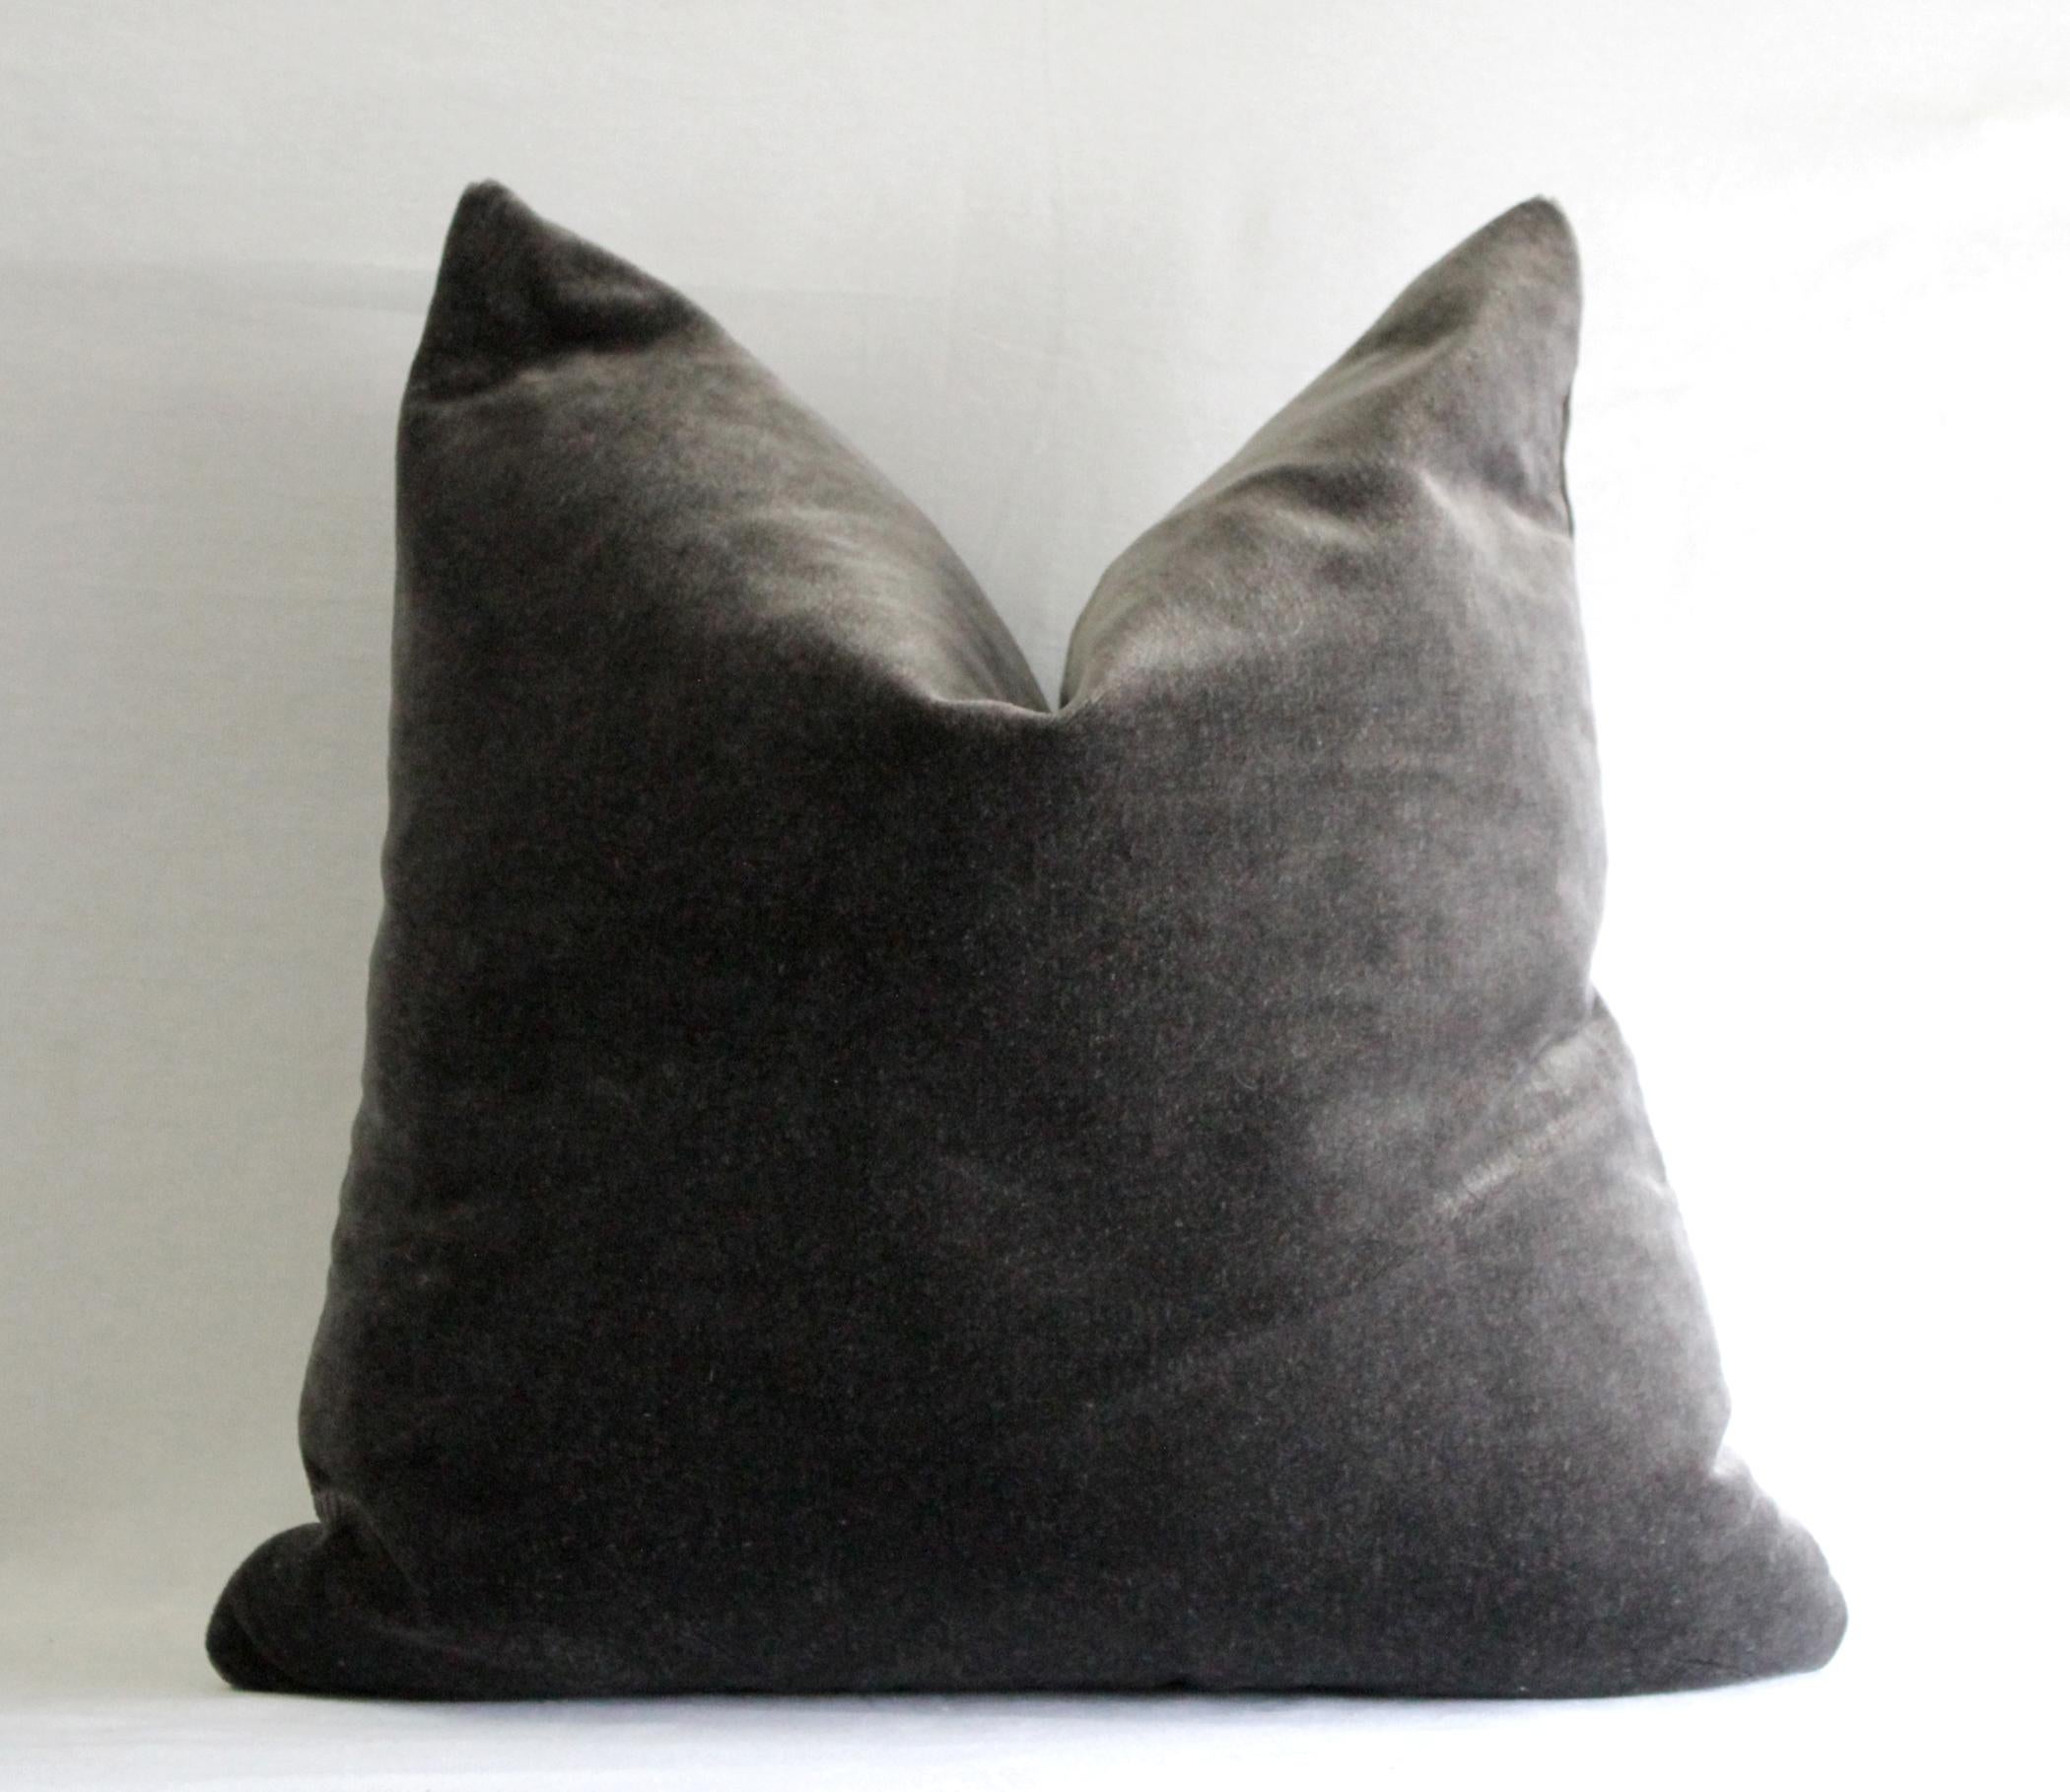 Pair of Mohair pillows with hidden zipper closure
Measures: 21.5